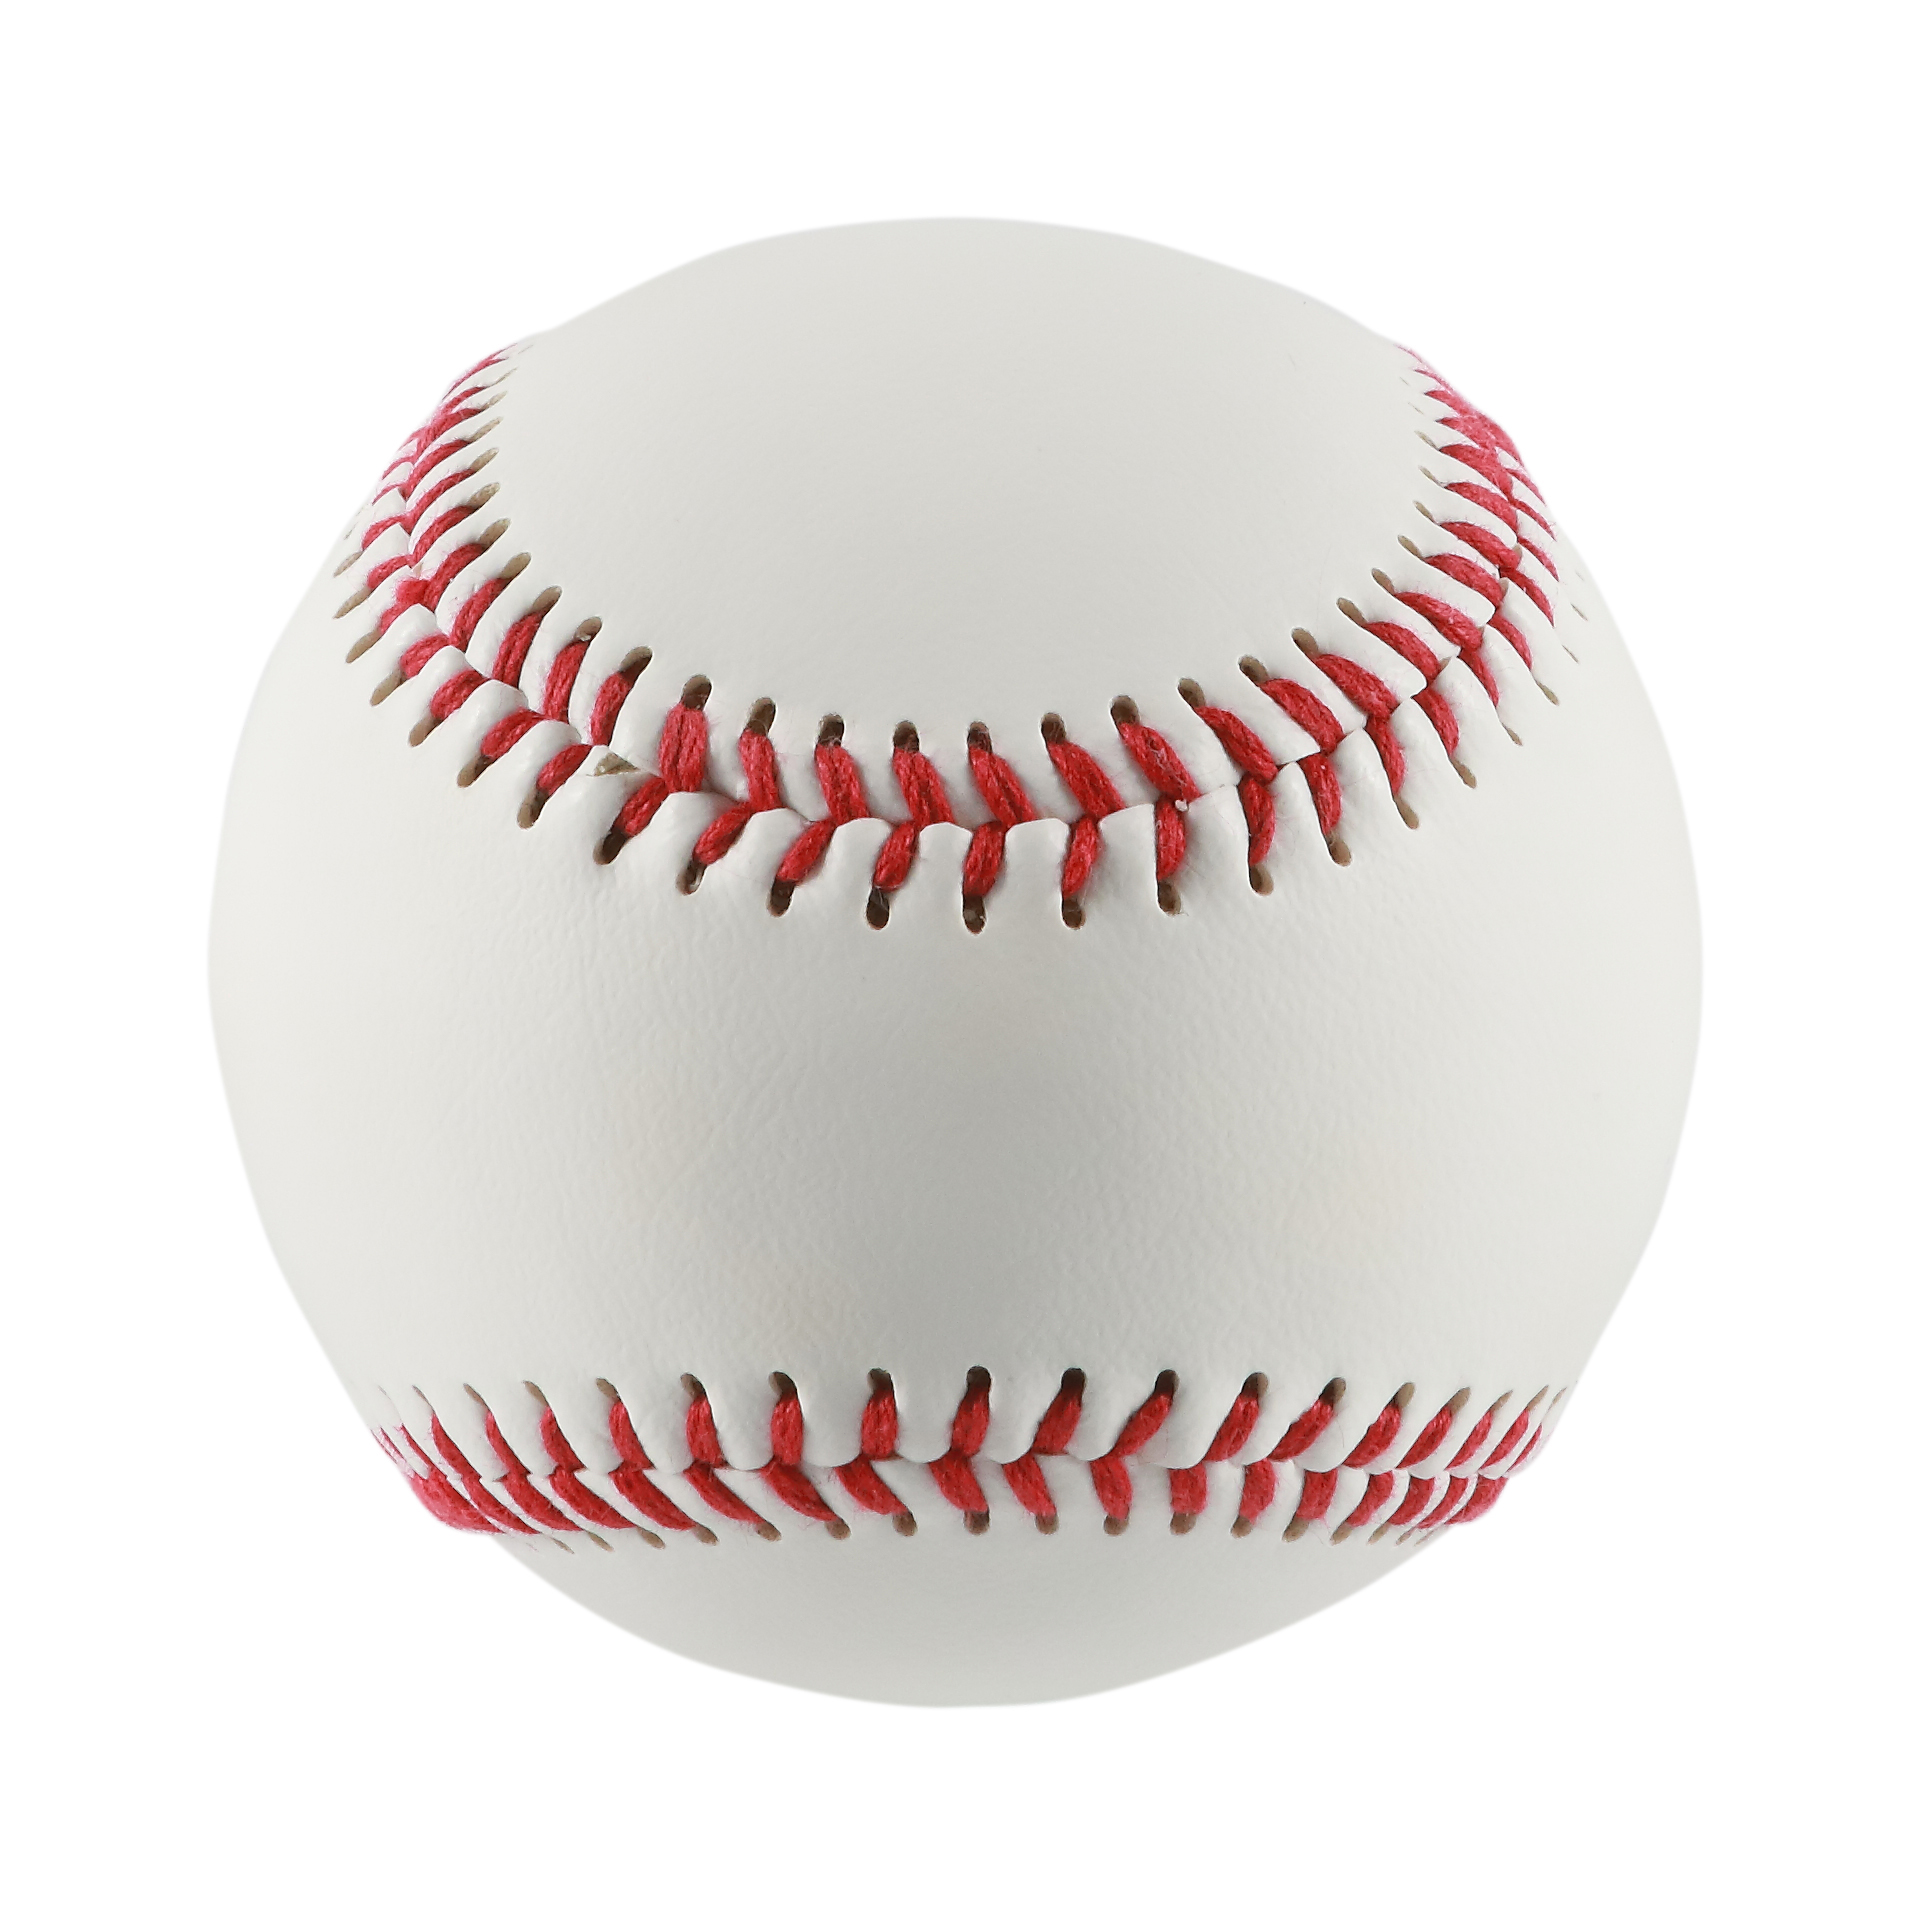 9 'entraînement en cuir synthétique Baseball vente directe d'usine Baseball